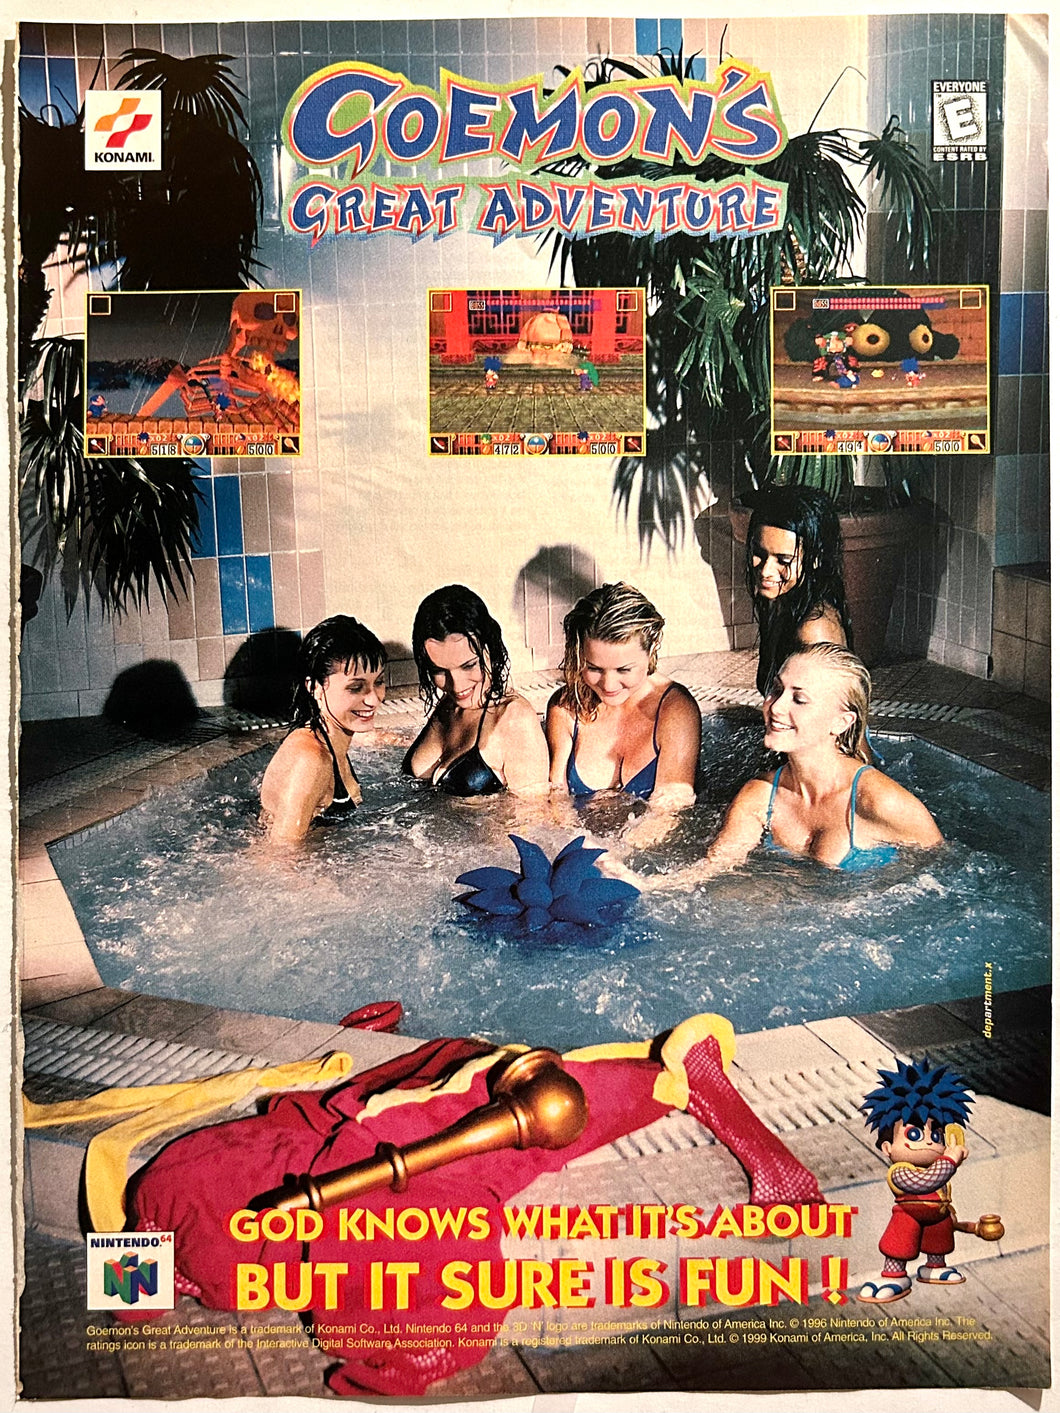 Goemon’s Great Adventure - N64 - Original Vintage Advertisement - Print Ads - Laminated A4 Poster